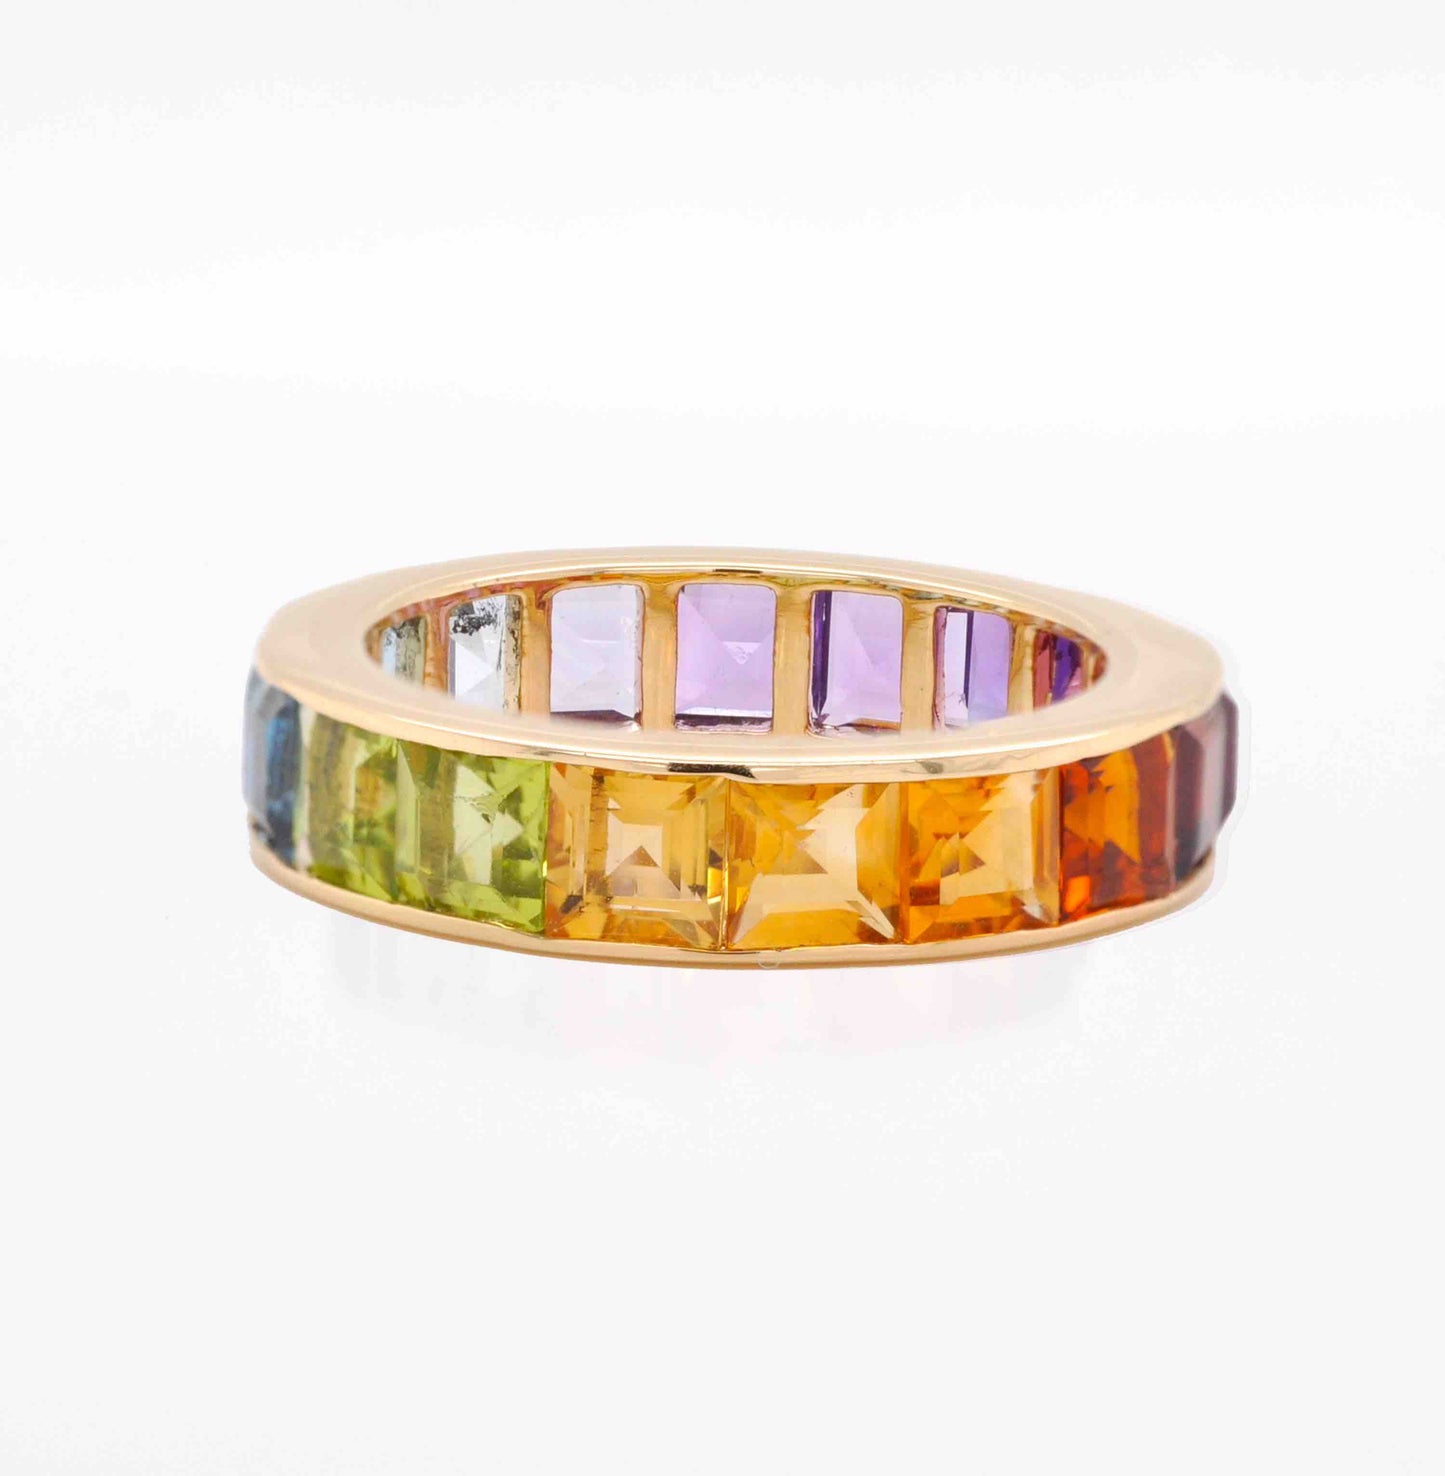 18K Gold Channel-Set Rainbow Gemstones Eternity Band Ring - Vaibhav Dhadda Jewelry